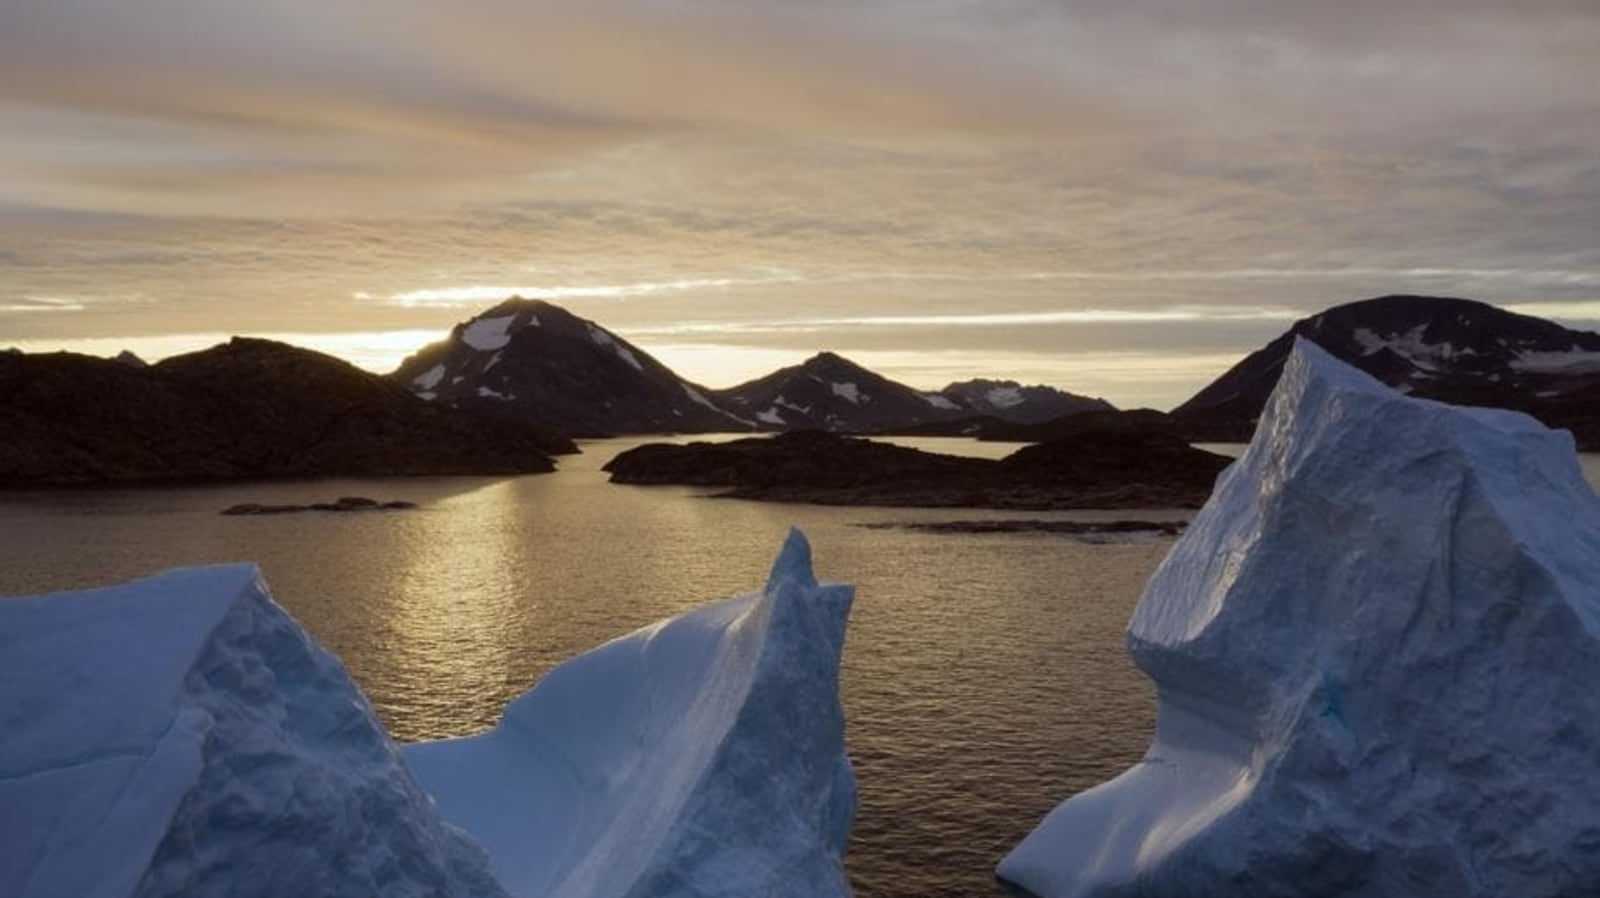 largest iceberg breaks off antarctica